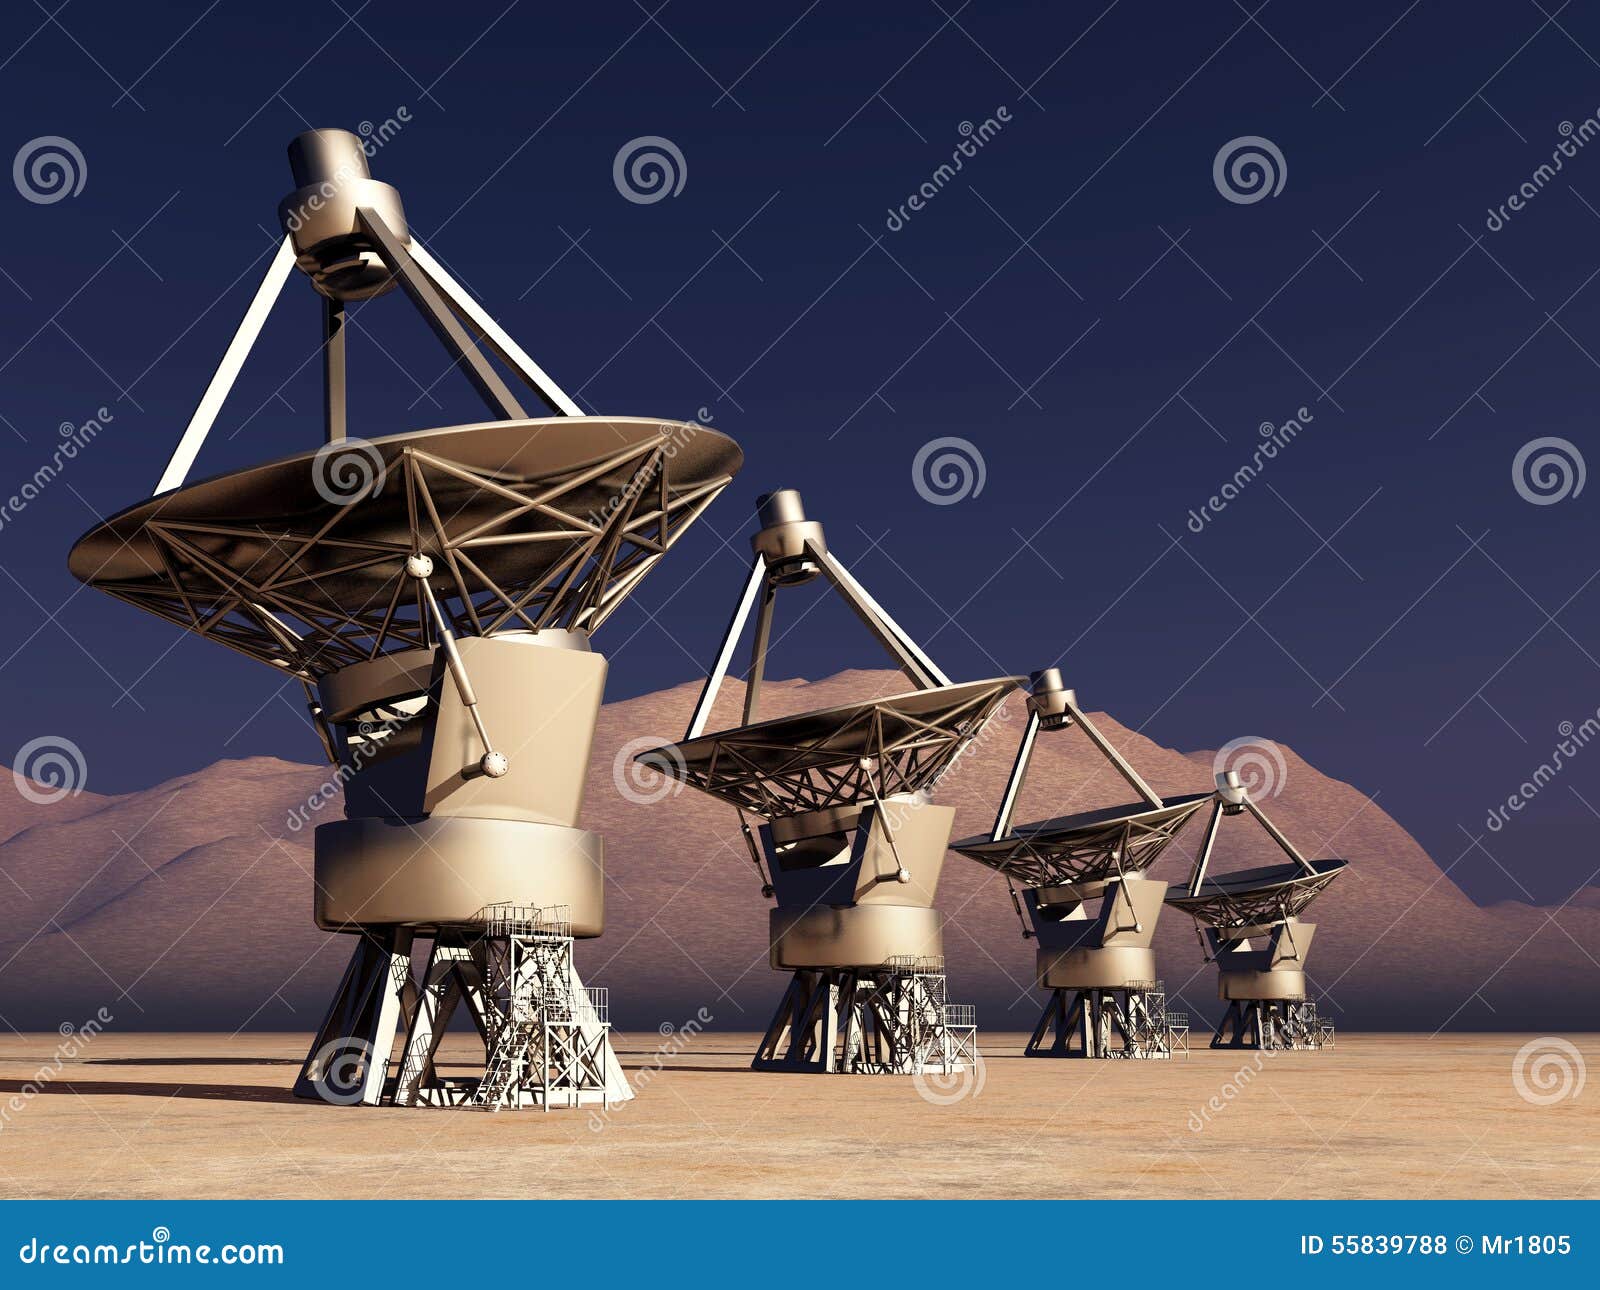 giant telescopes